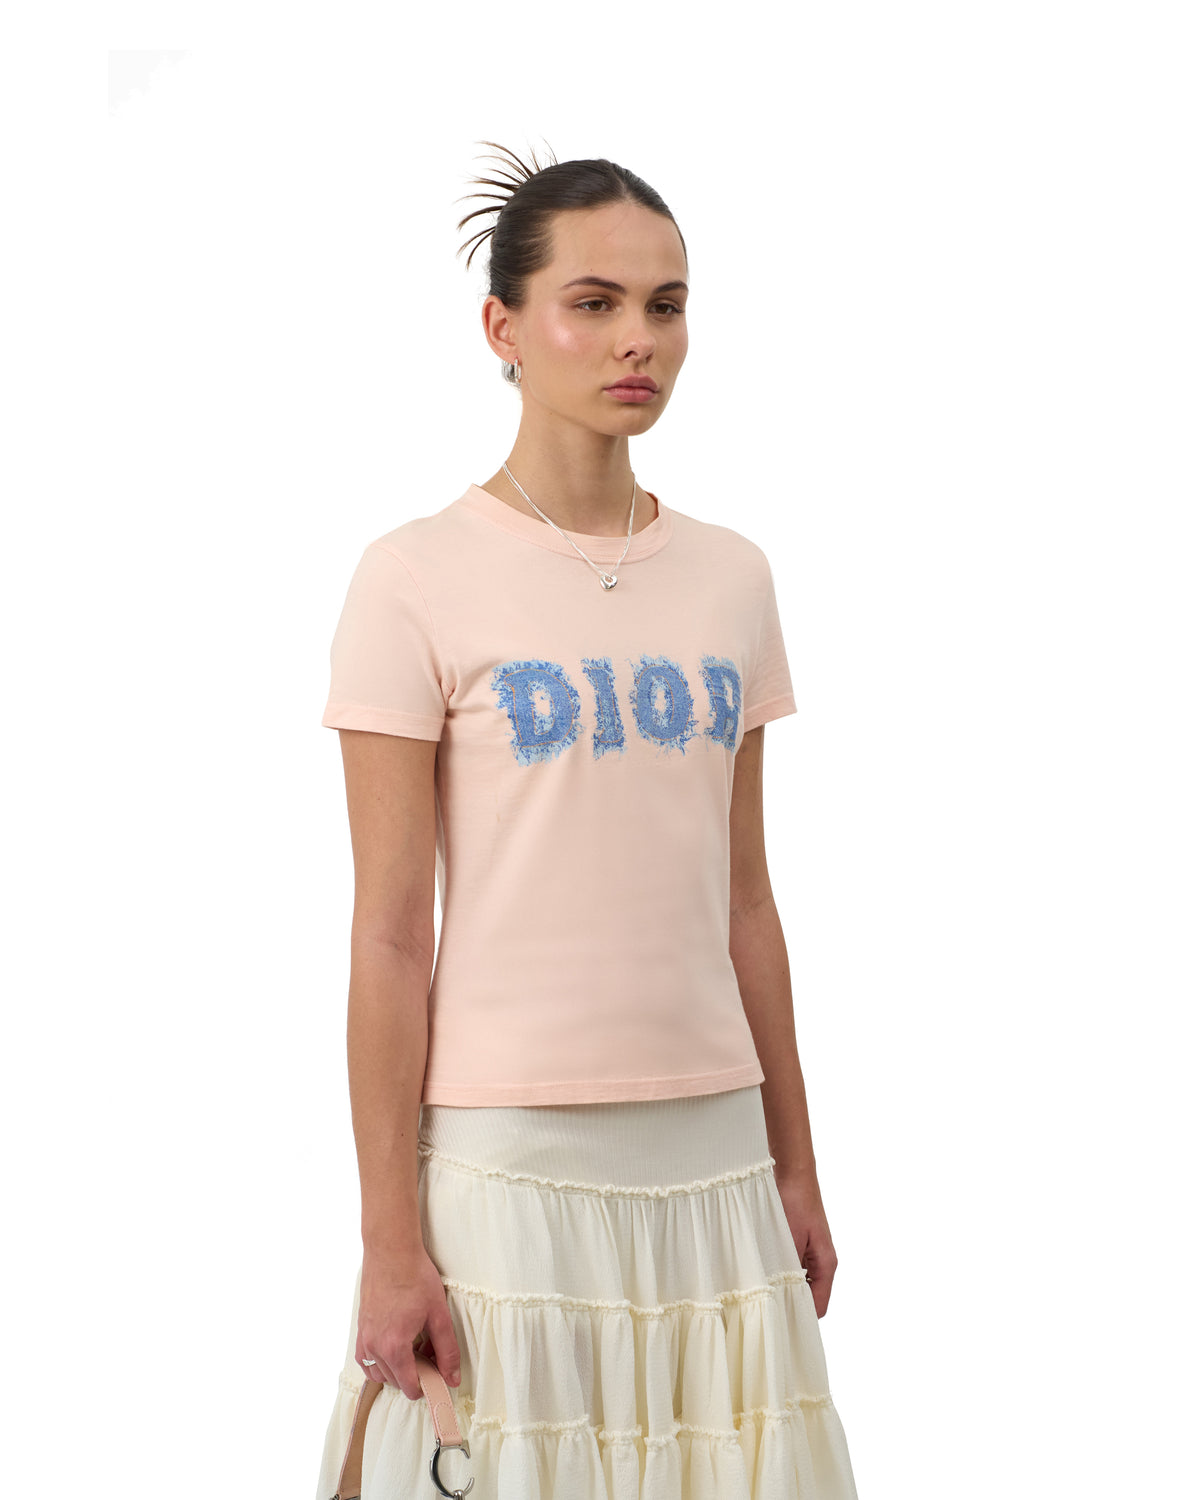 Pre-Owned Christian Dior Denim Print T-Shirt